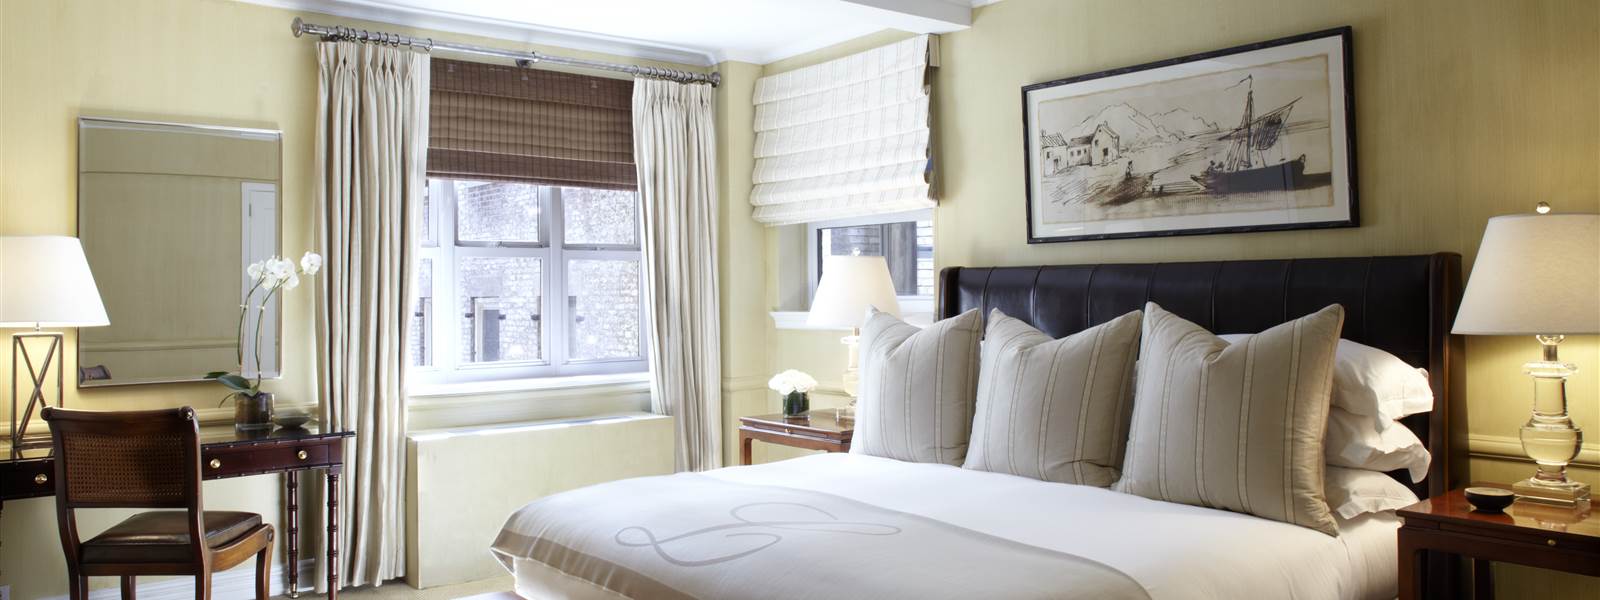 #1 Hotel Luxury Room in Manhattan - Lowell Suite Bedroom